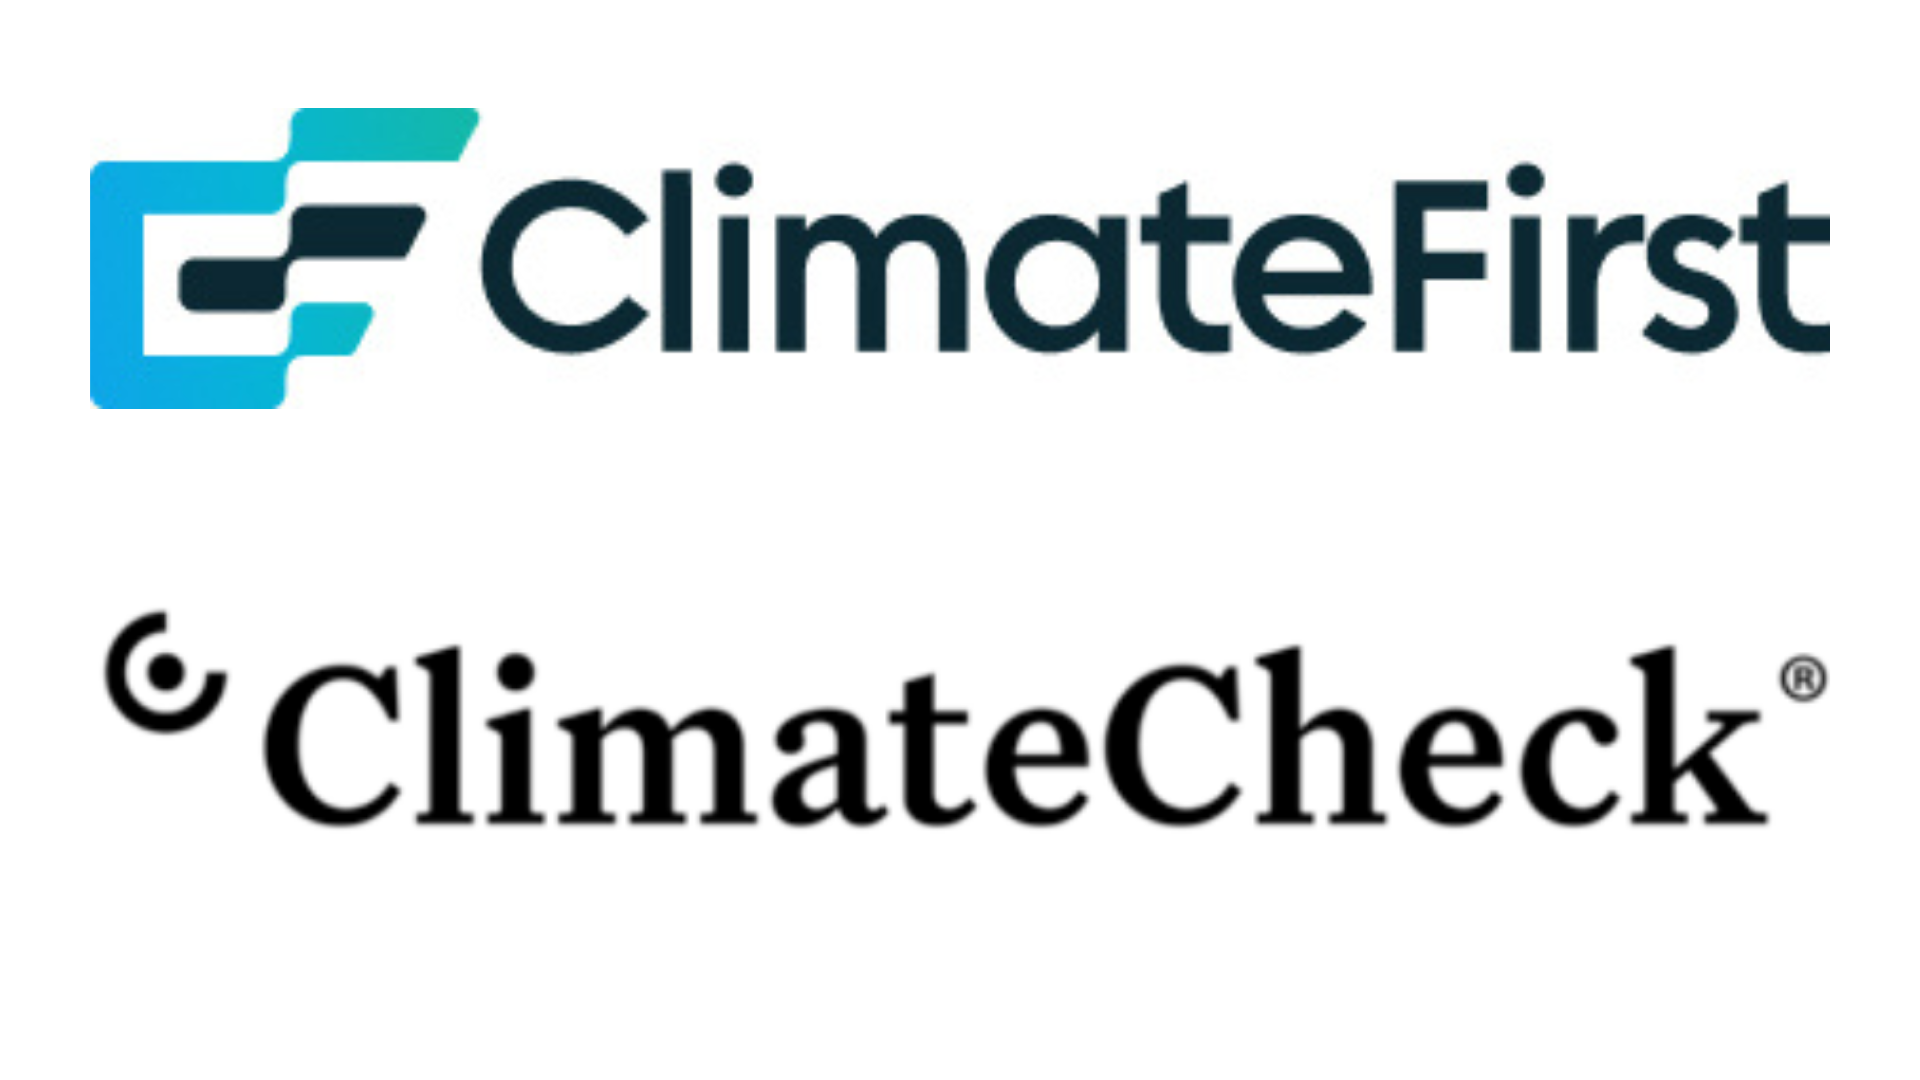 ClimateFirst and ClimateCheck logos